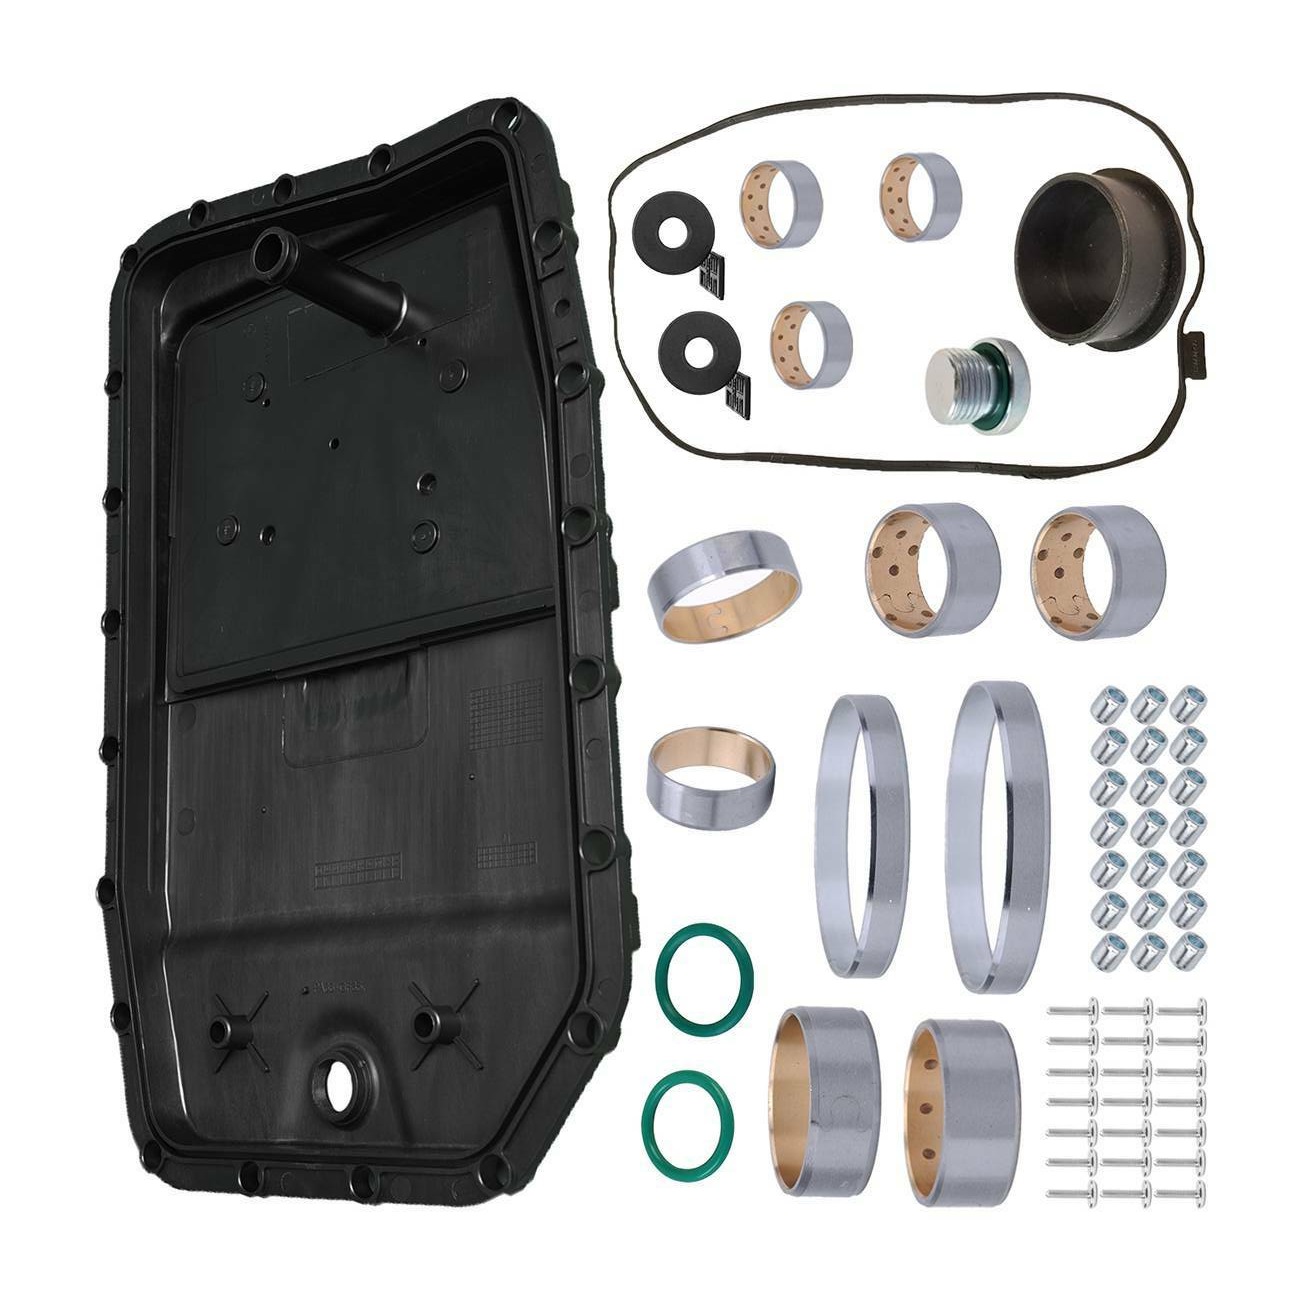 Auto Trans Oil Pan Filter + Repair Kit + Drain Plug for BMW E83 E89 E90 German Made